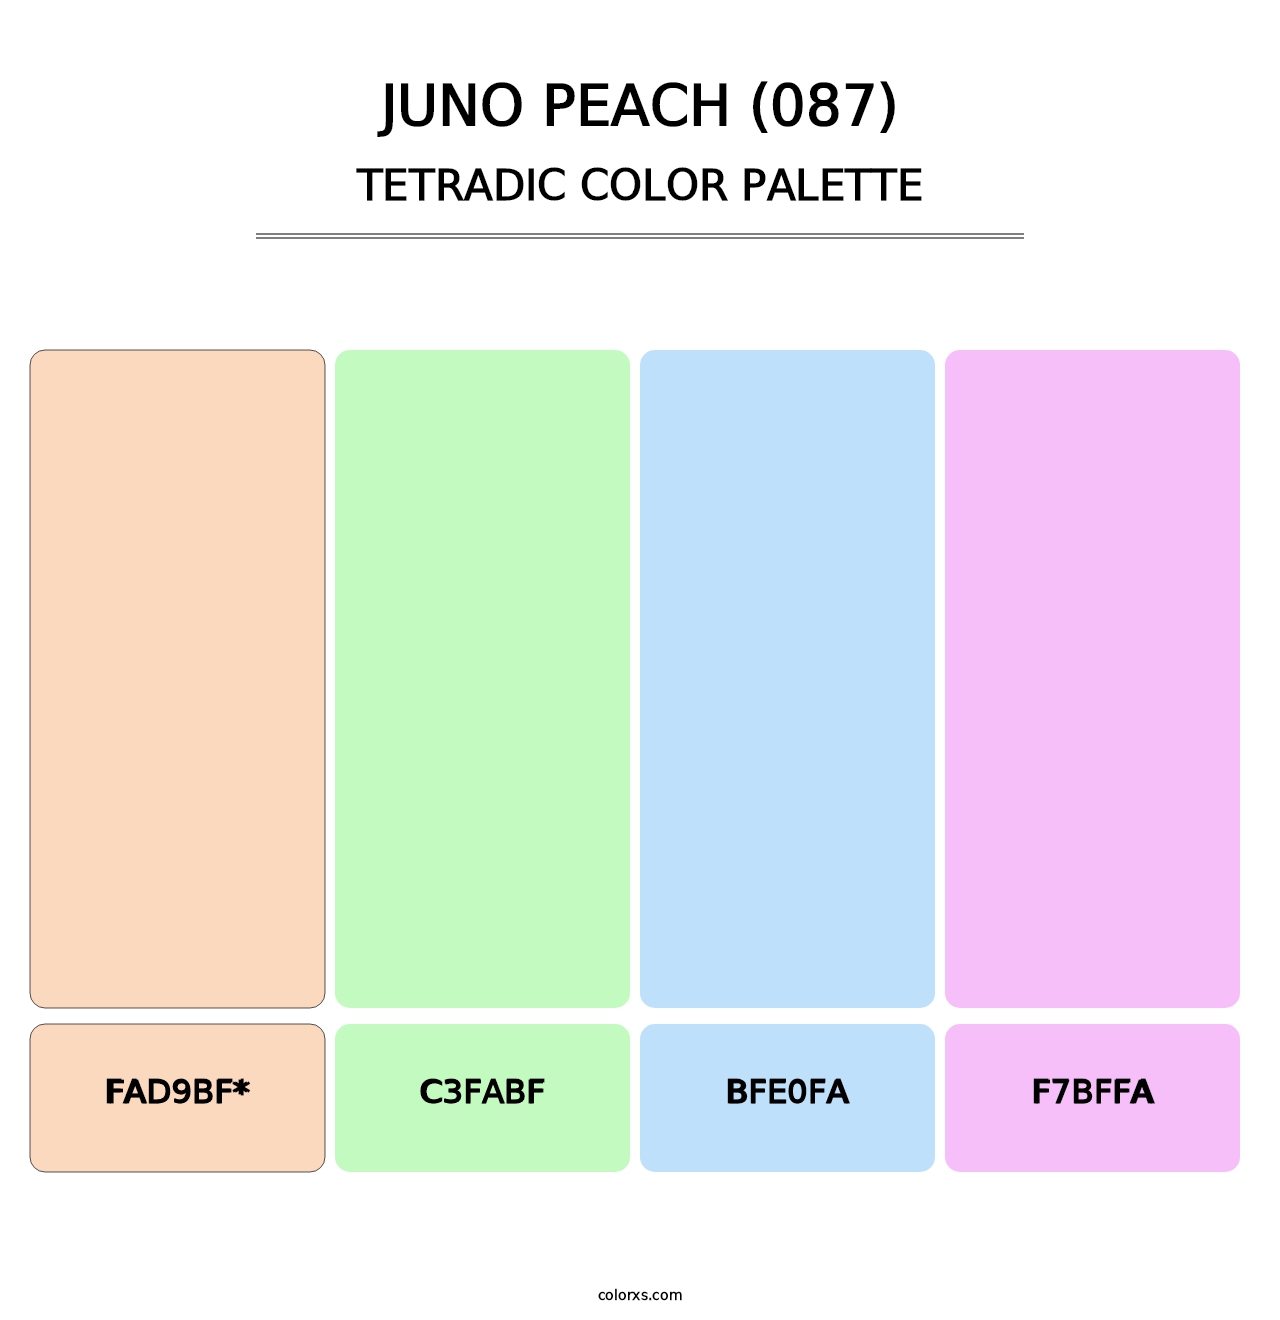 Juno Peach (087) - Tetradic Color Palette